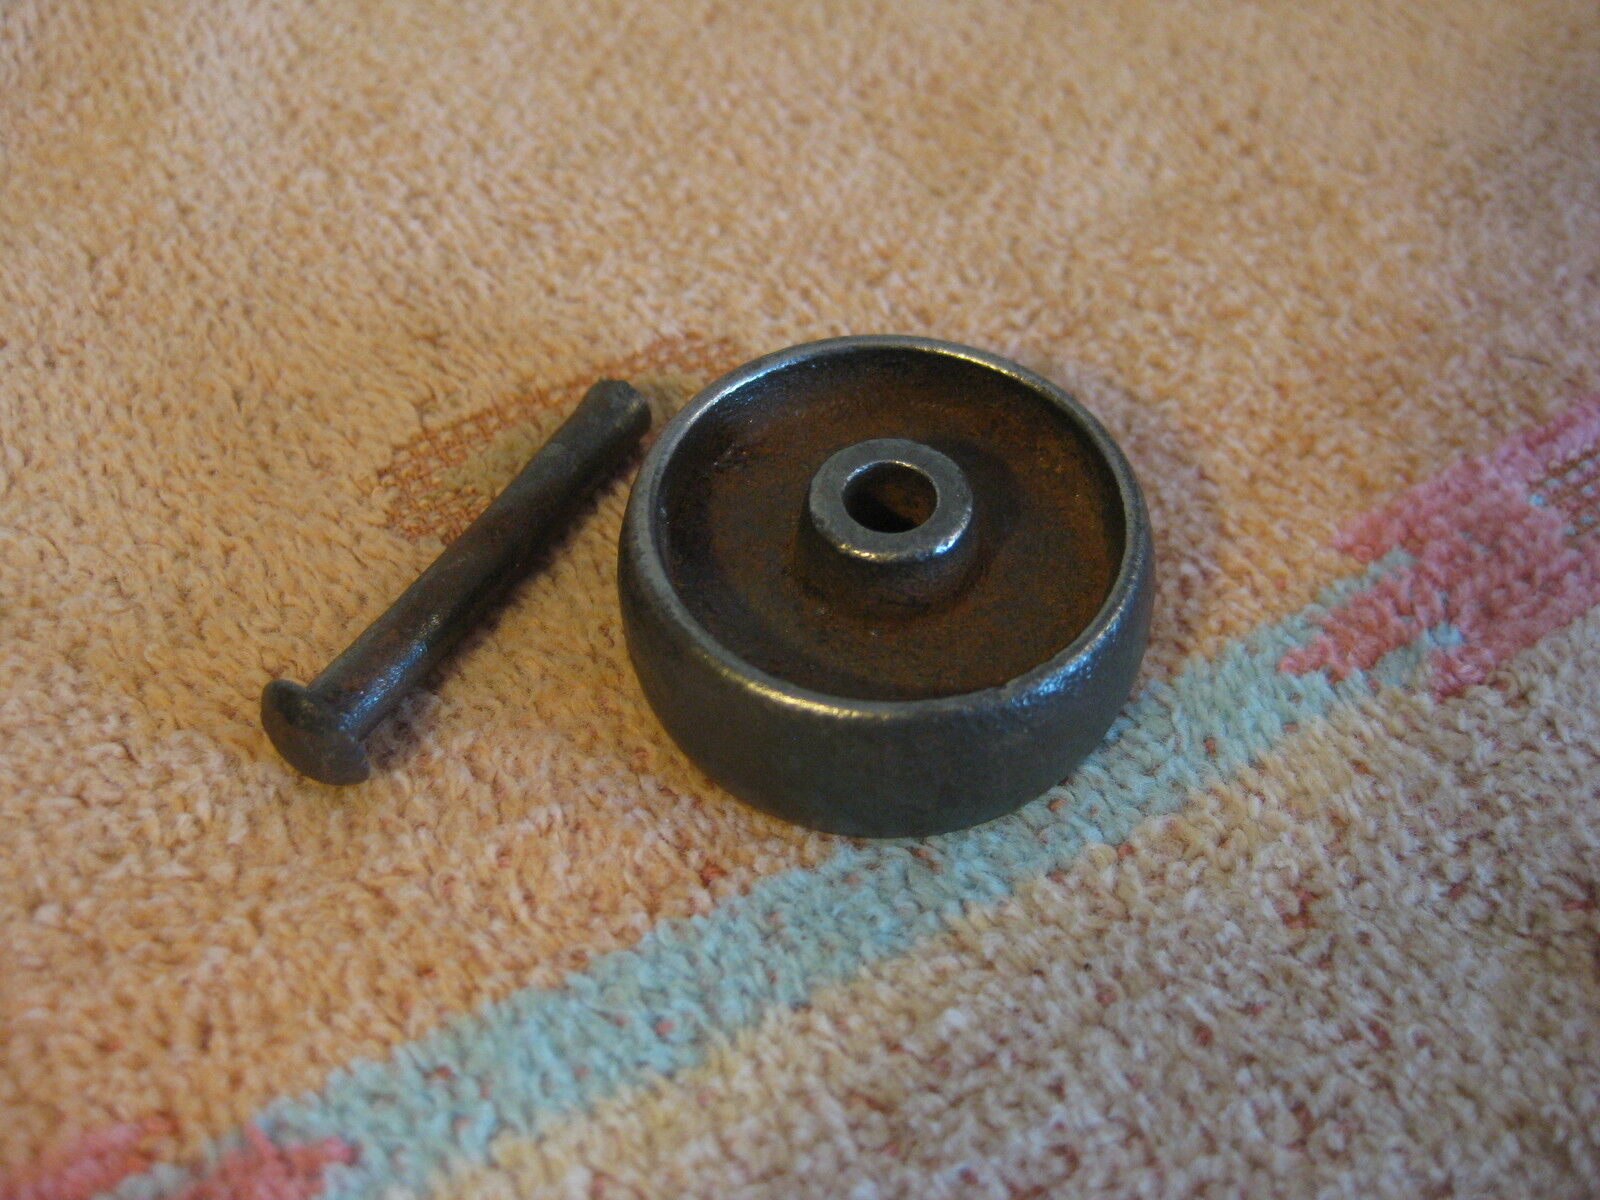 Singer Steel Caster Wheel for Treadle Sewing Machine Used Vintage Original